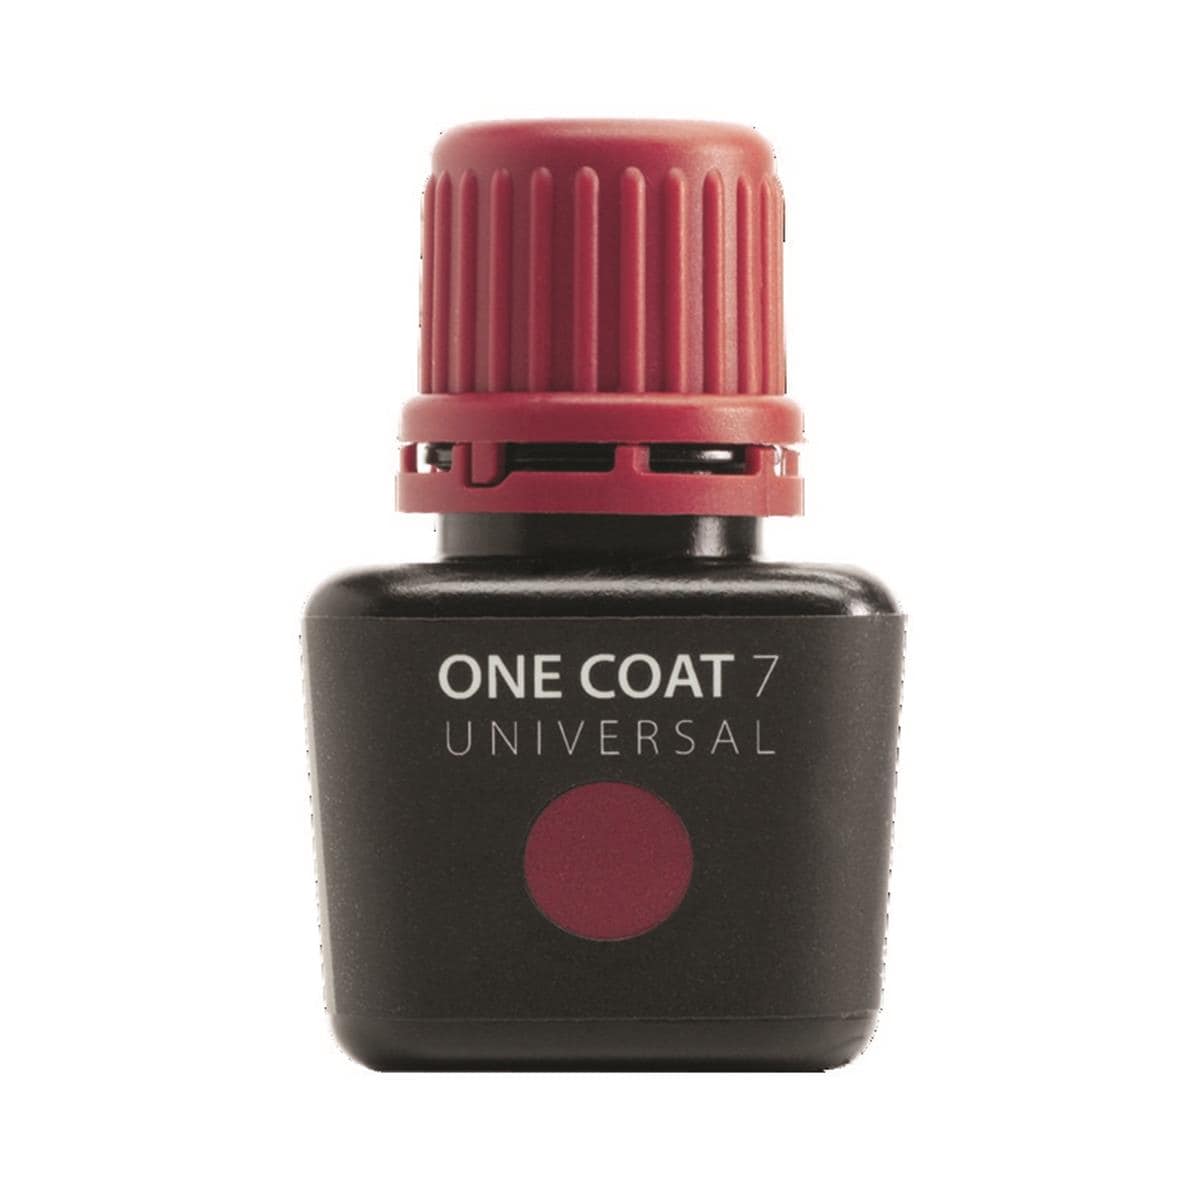 One Coat 7 Universal COLTENE - Flacon de 5ml